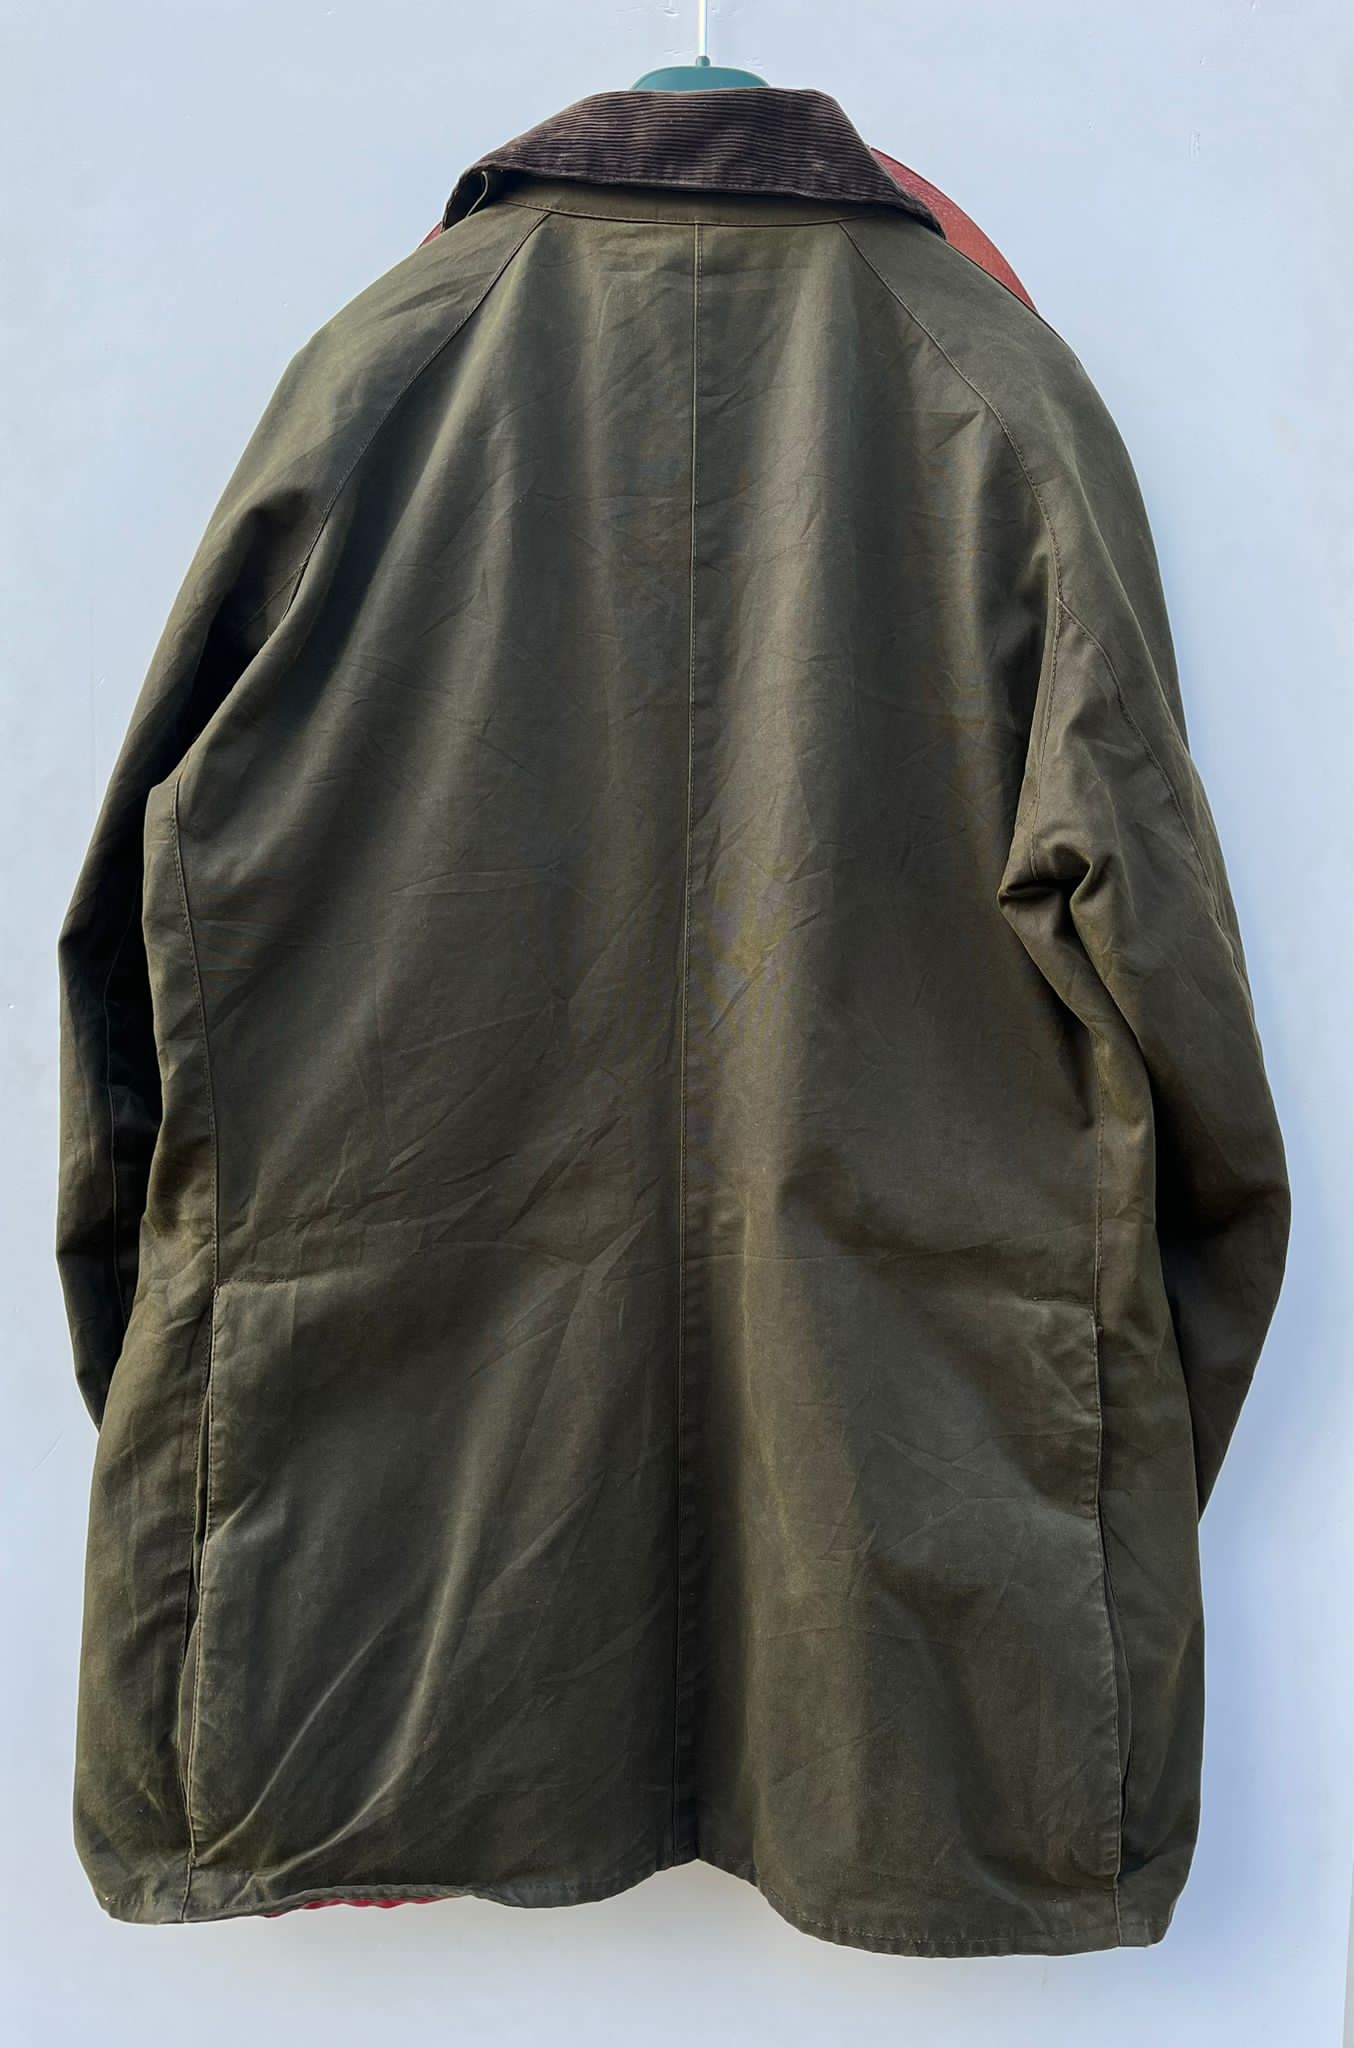 RARA Giacca Barbour Verde Cerata Large  - Man Green  waxed jacket Size large